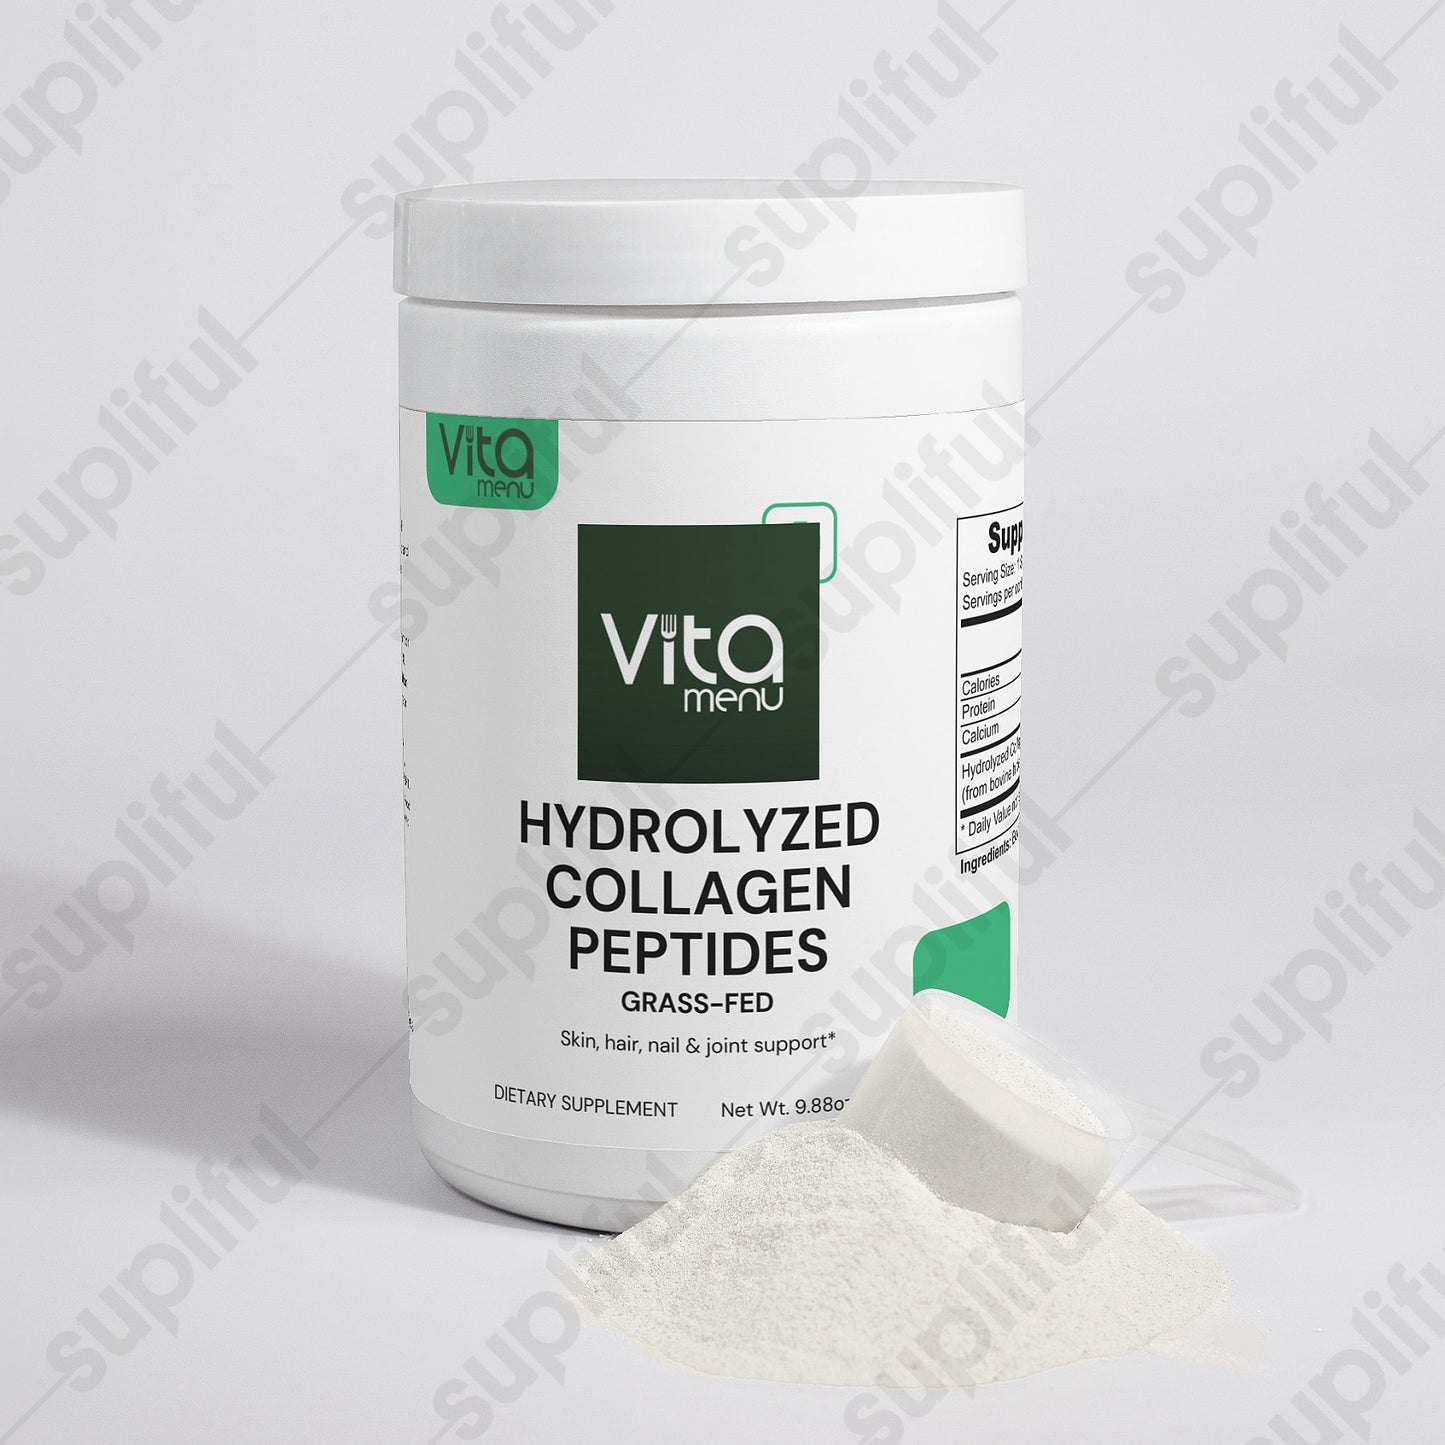 Grass-Fed Hydrolyzed Collagen Peptides - VitaMenu